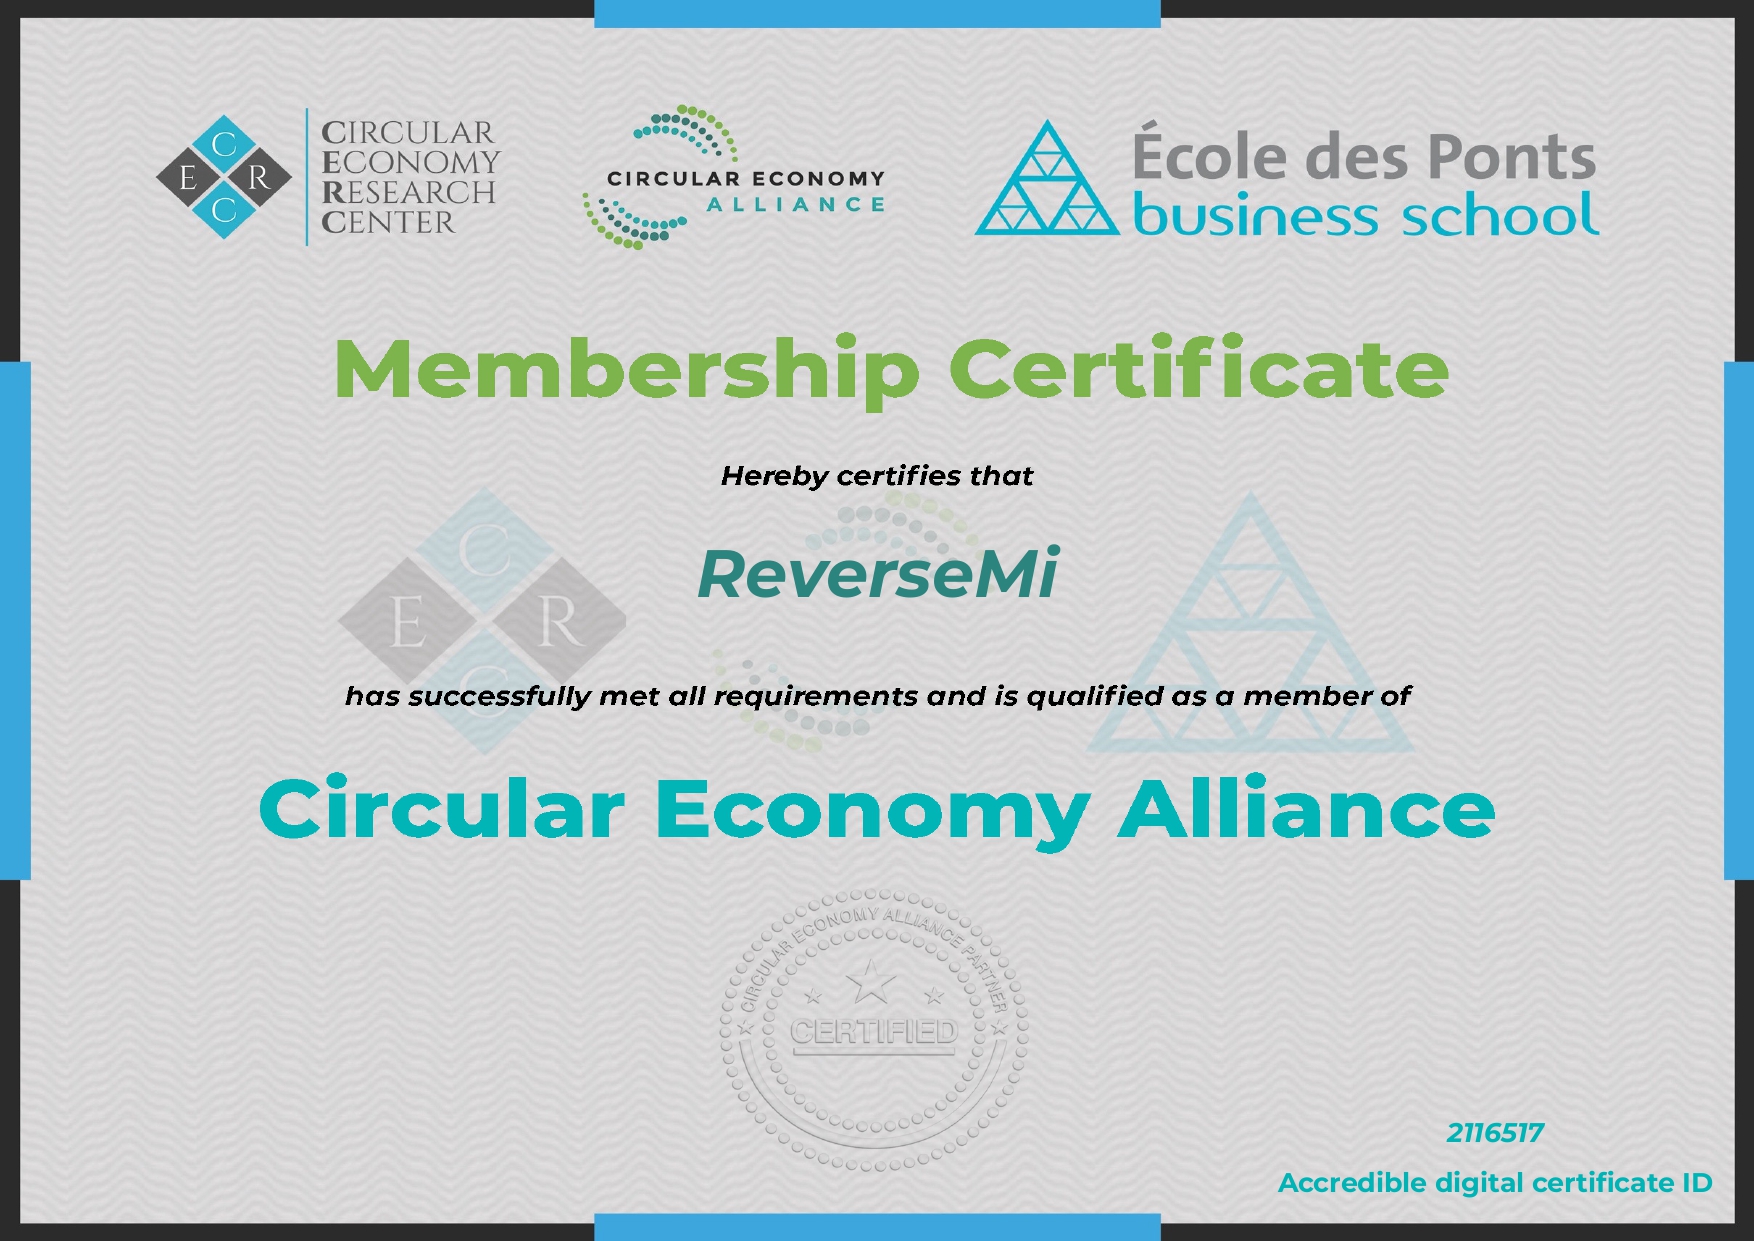 Circular Economy Alliance